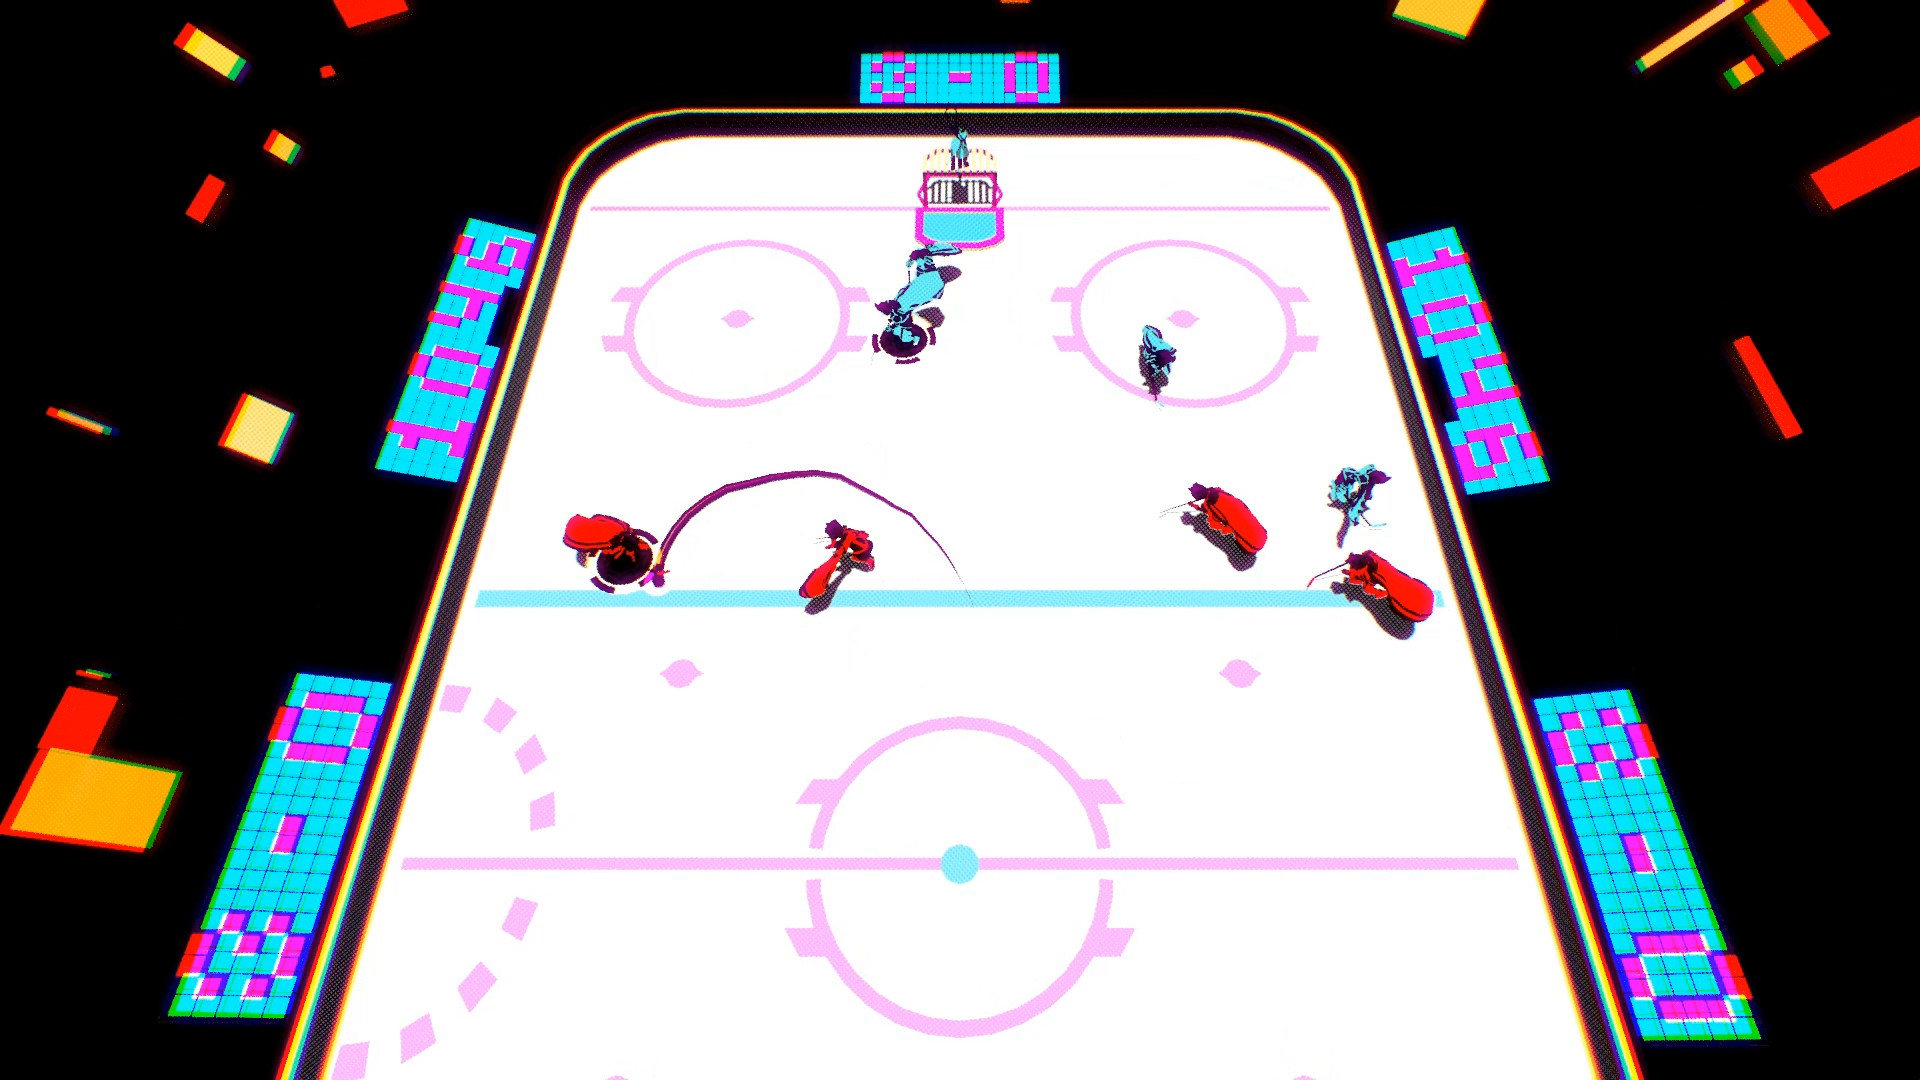 Игра хоккей 2013. Хоккей Space Hockey. Хоккей игра на ПК. Космический хоккей игра. Hockey игра Steam.